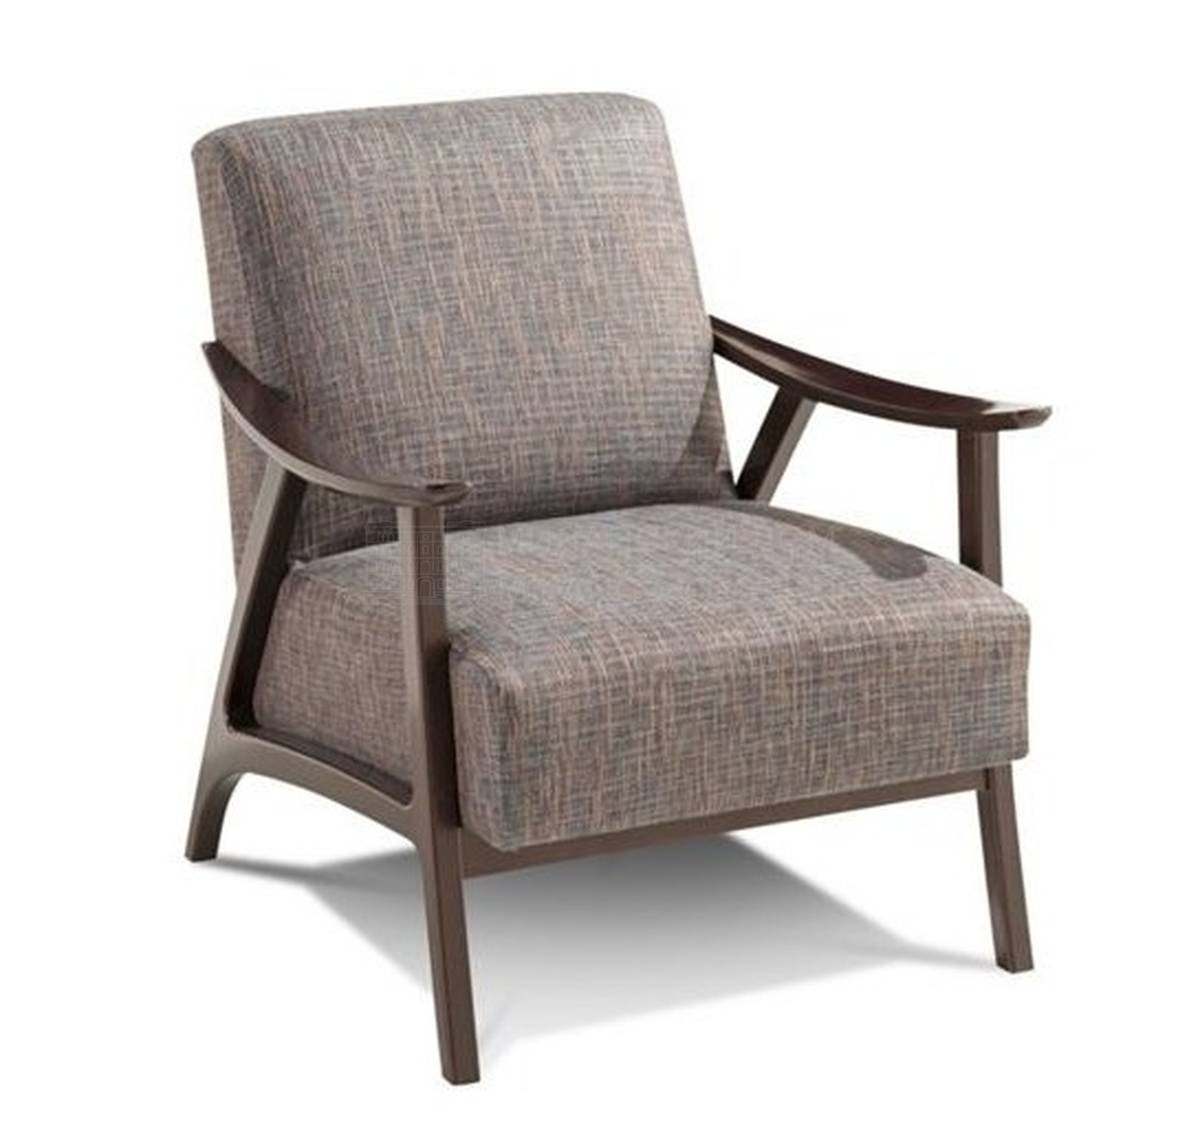 Кресло Charles armchair из Франции фабрики ROCHE BOBOIS